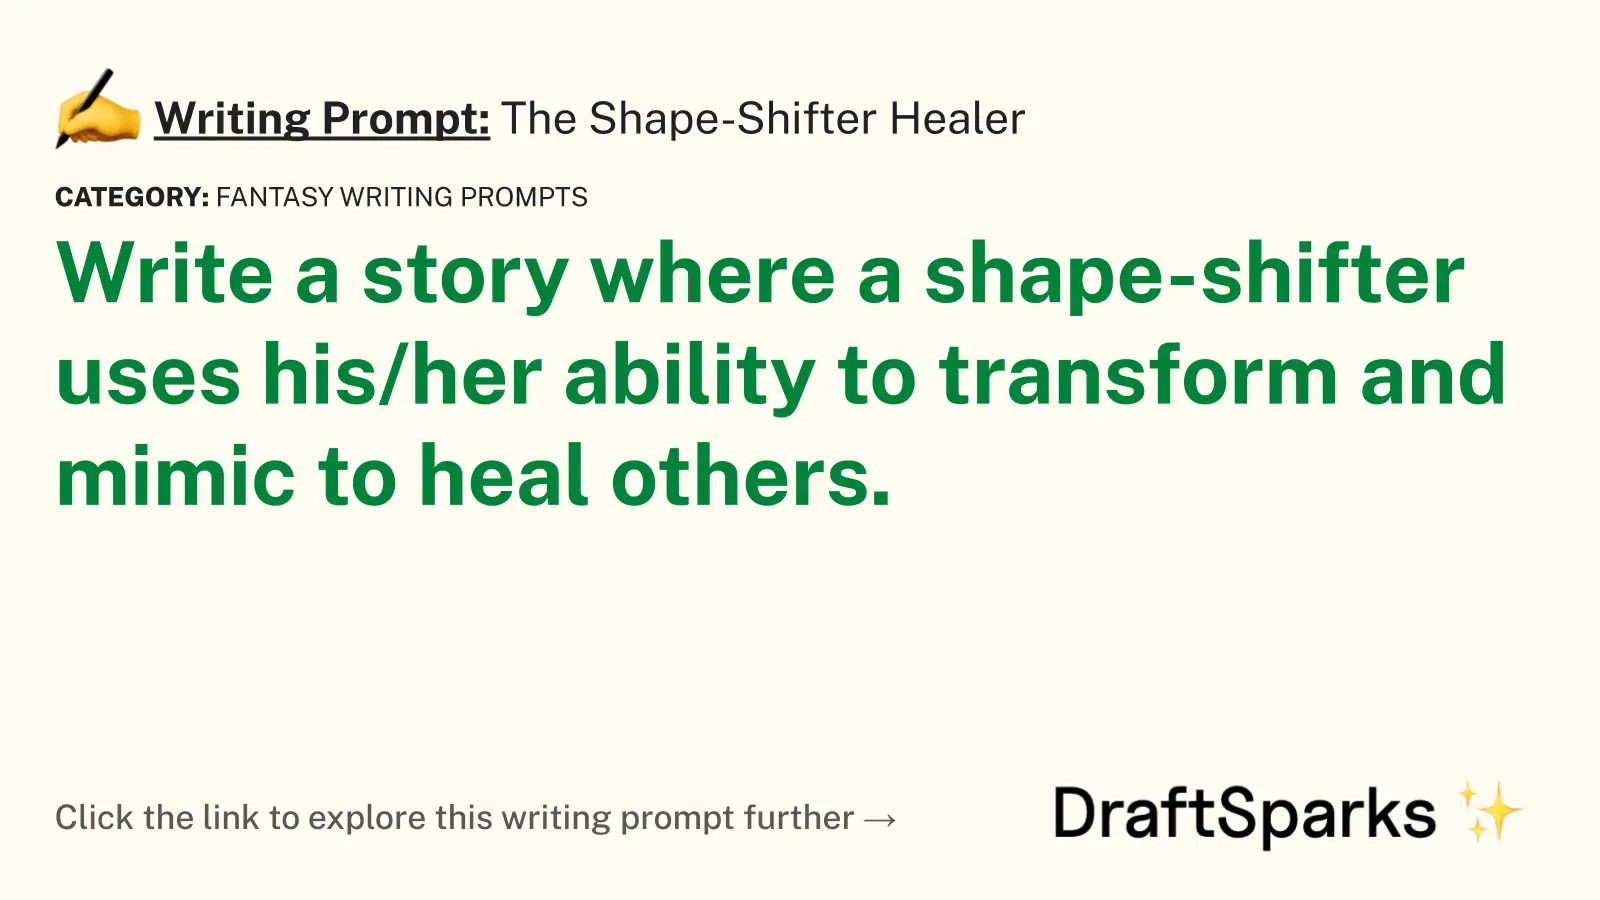 The Shape-Shifter Healer